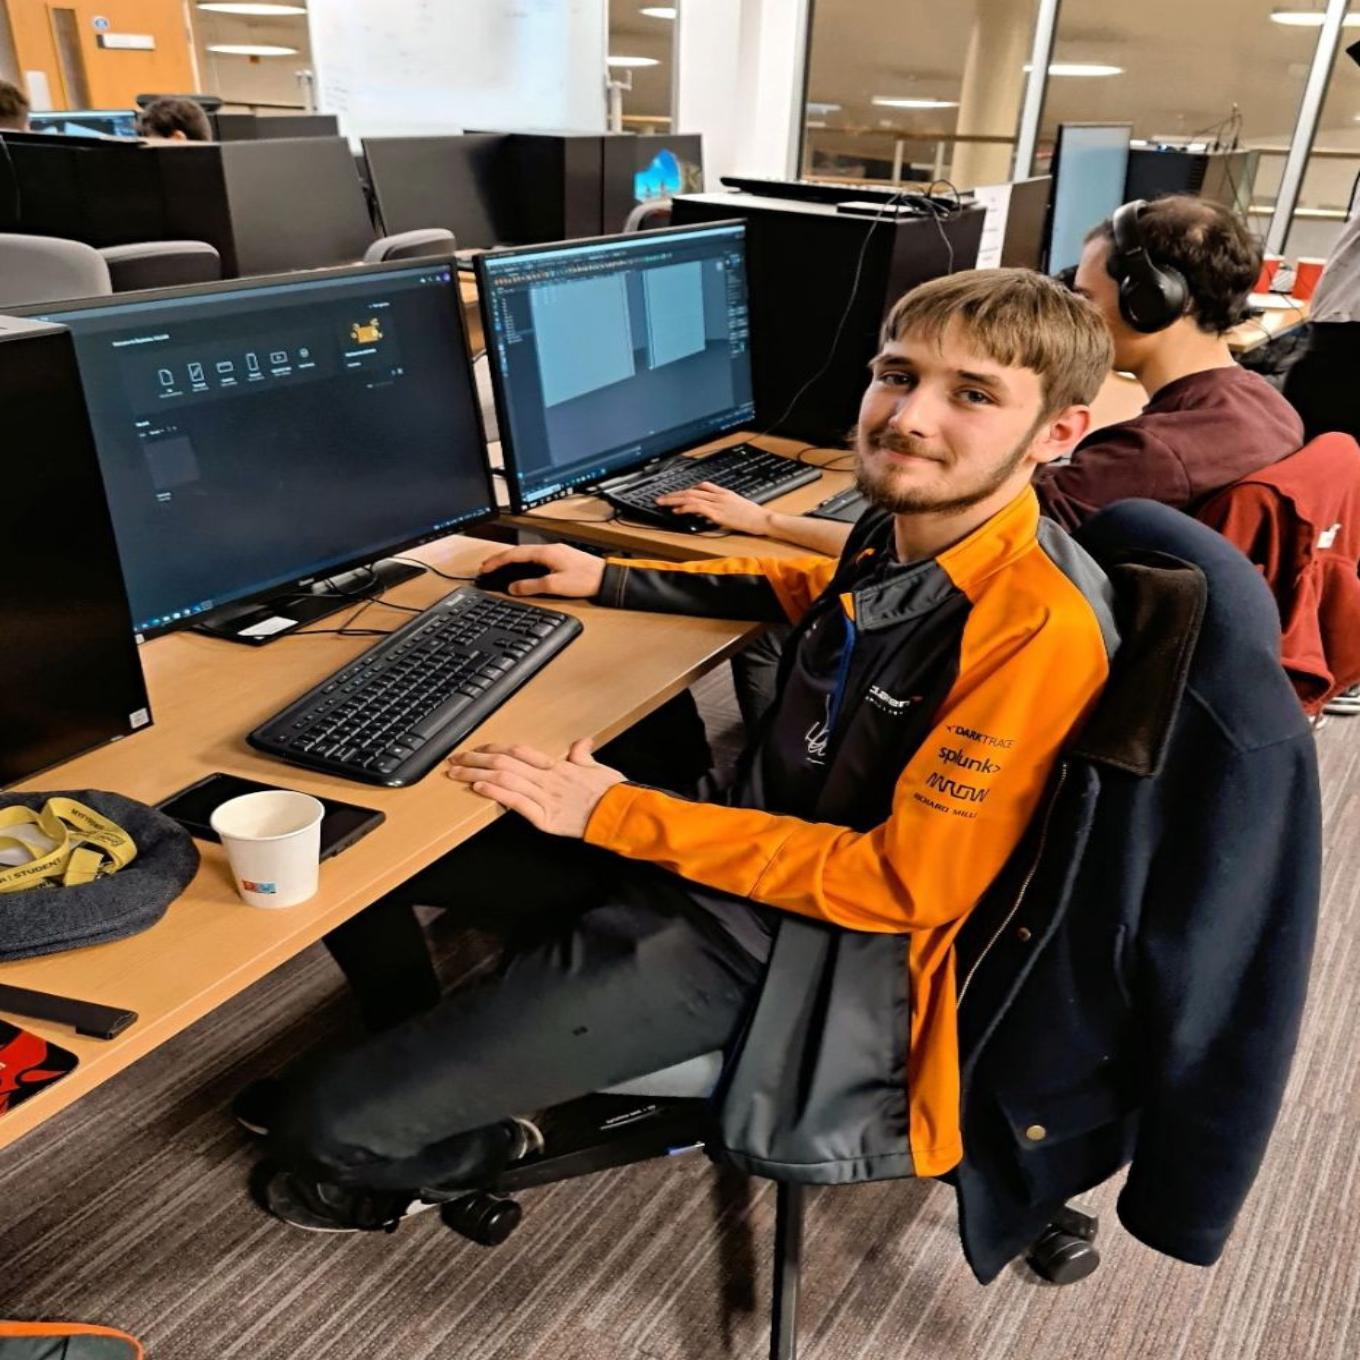 A student sat at a computer